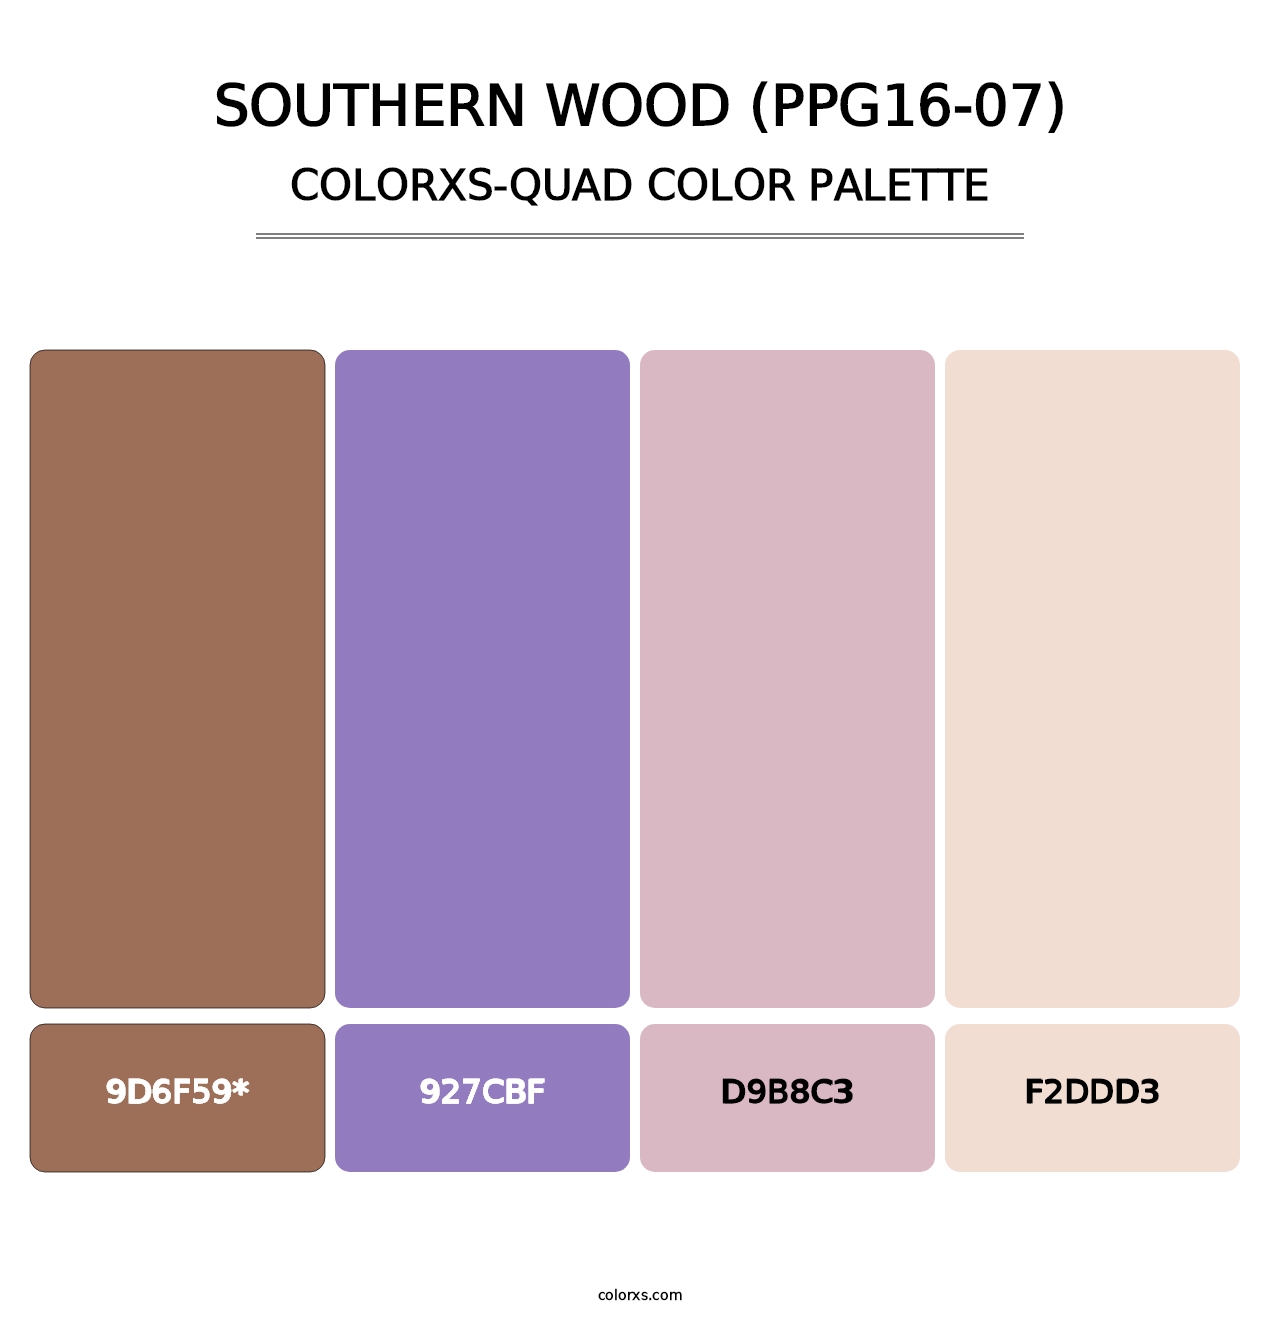 Southern Wood (PPG16-07) - Colorxs Quad Palette